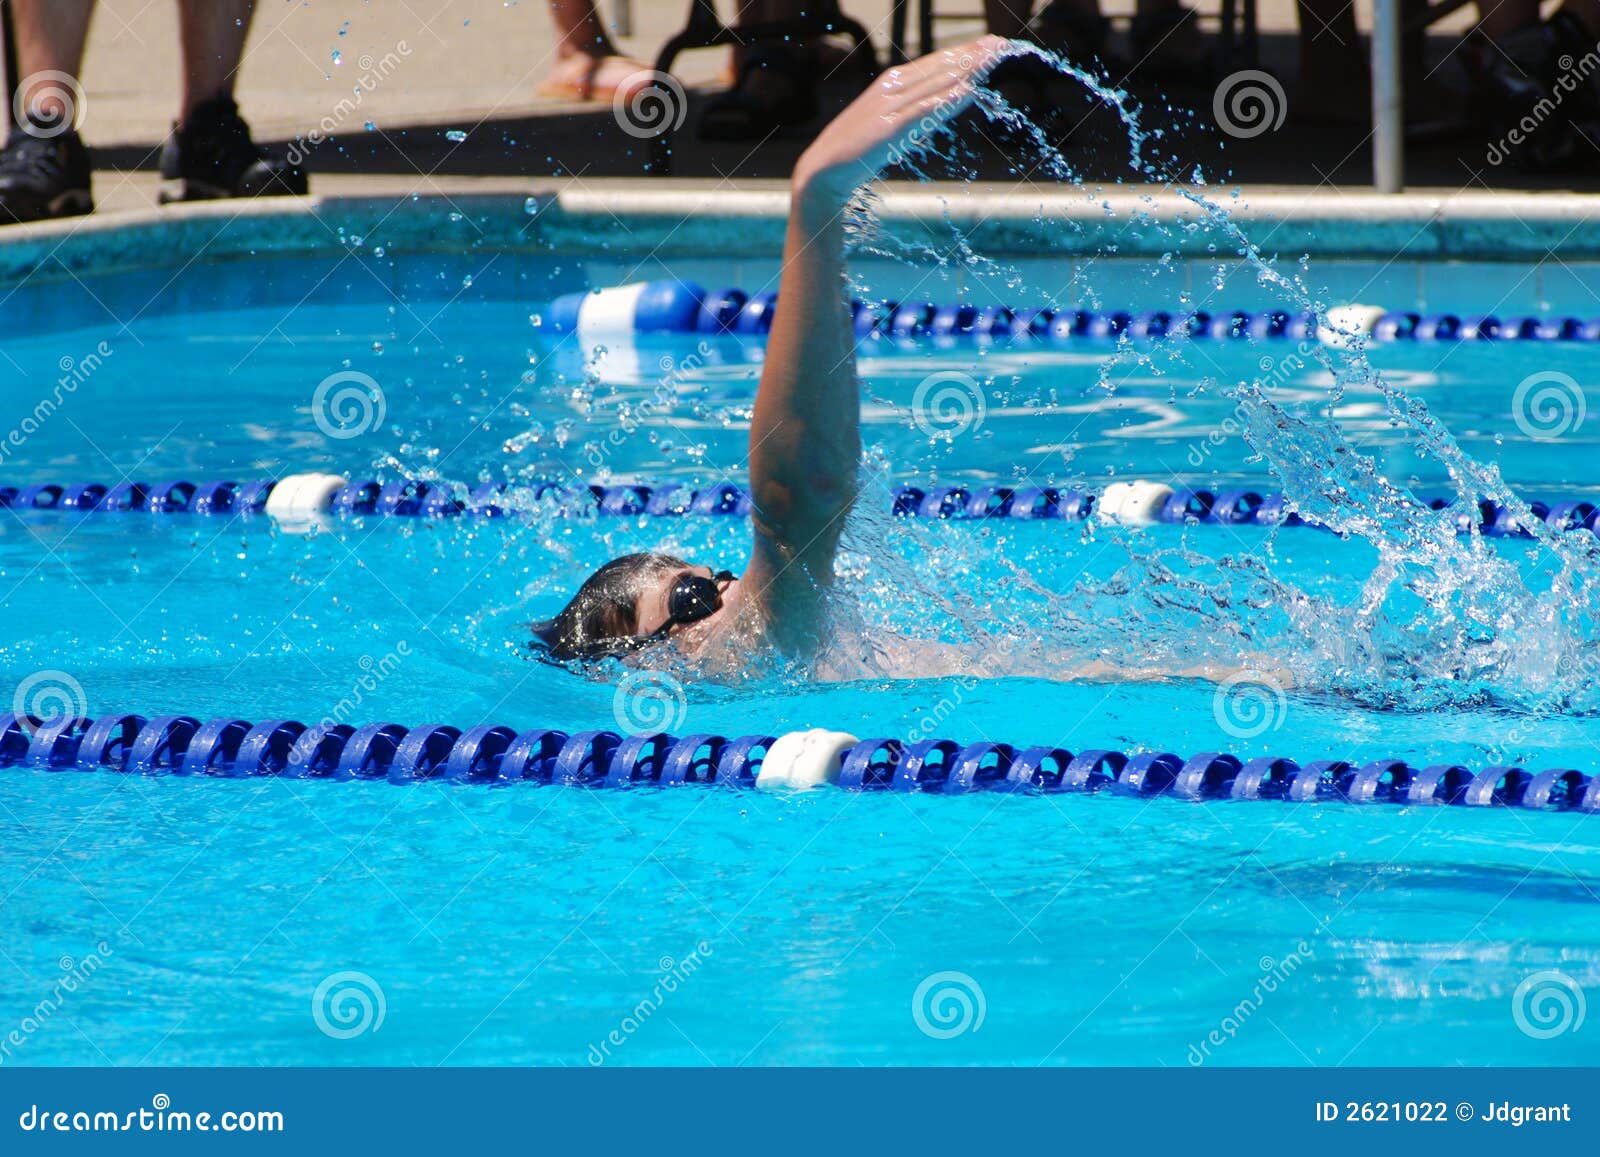 324 Swim Back Stroke Stock Photos - Free & Royalty-Free Stock